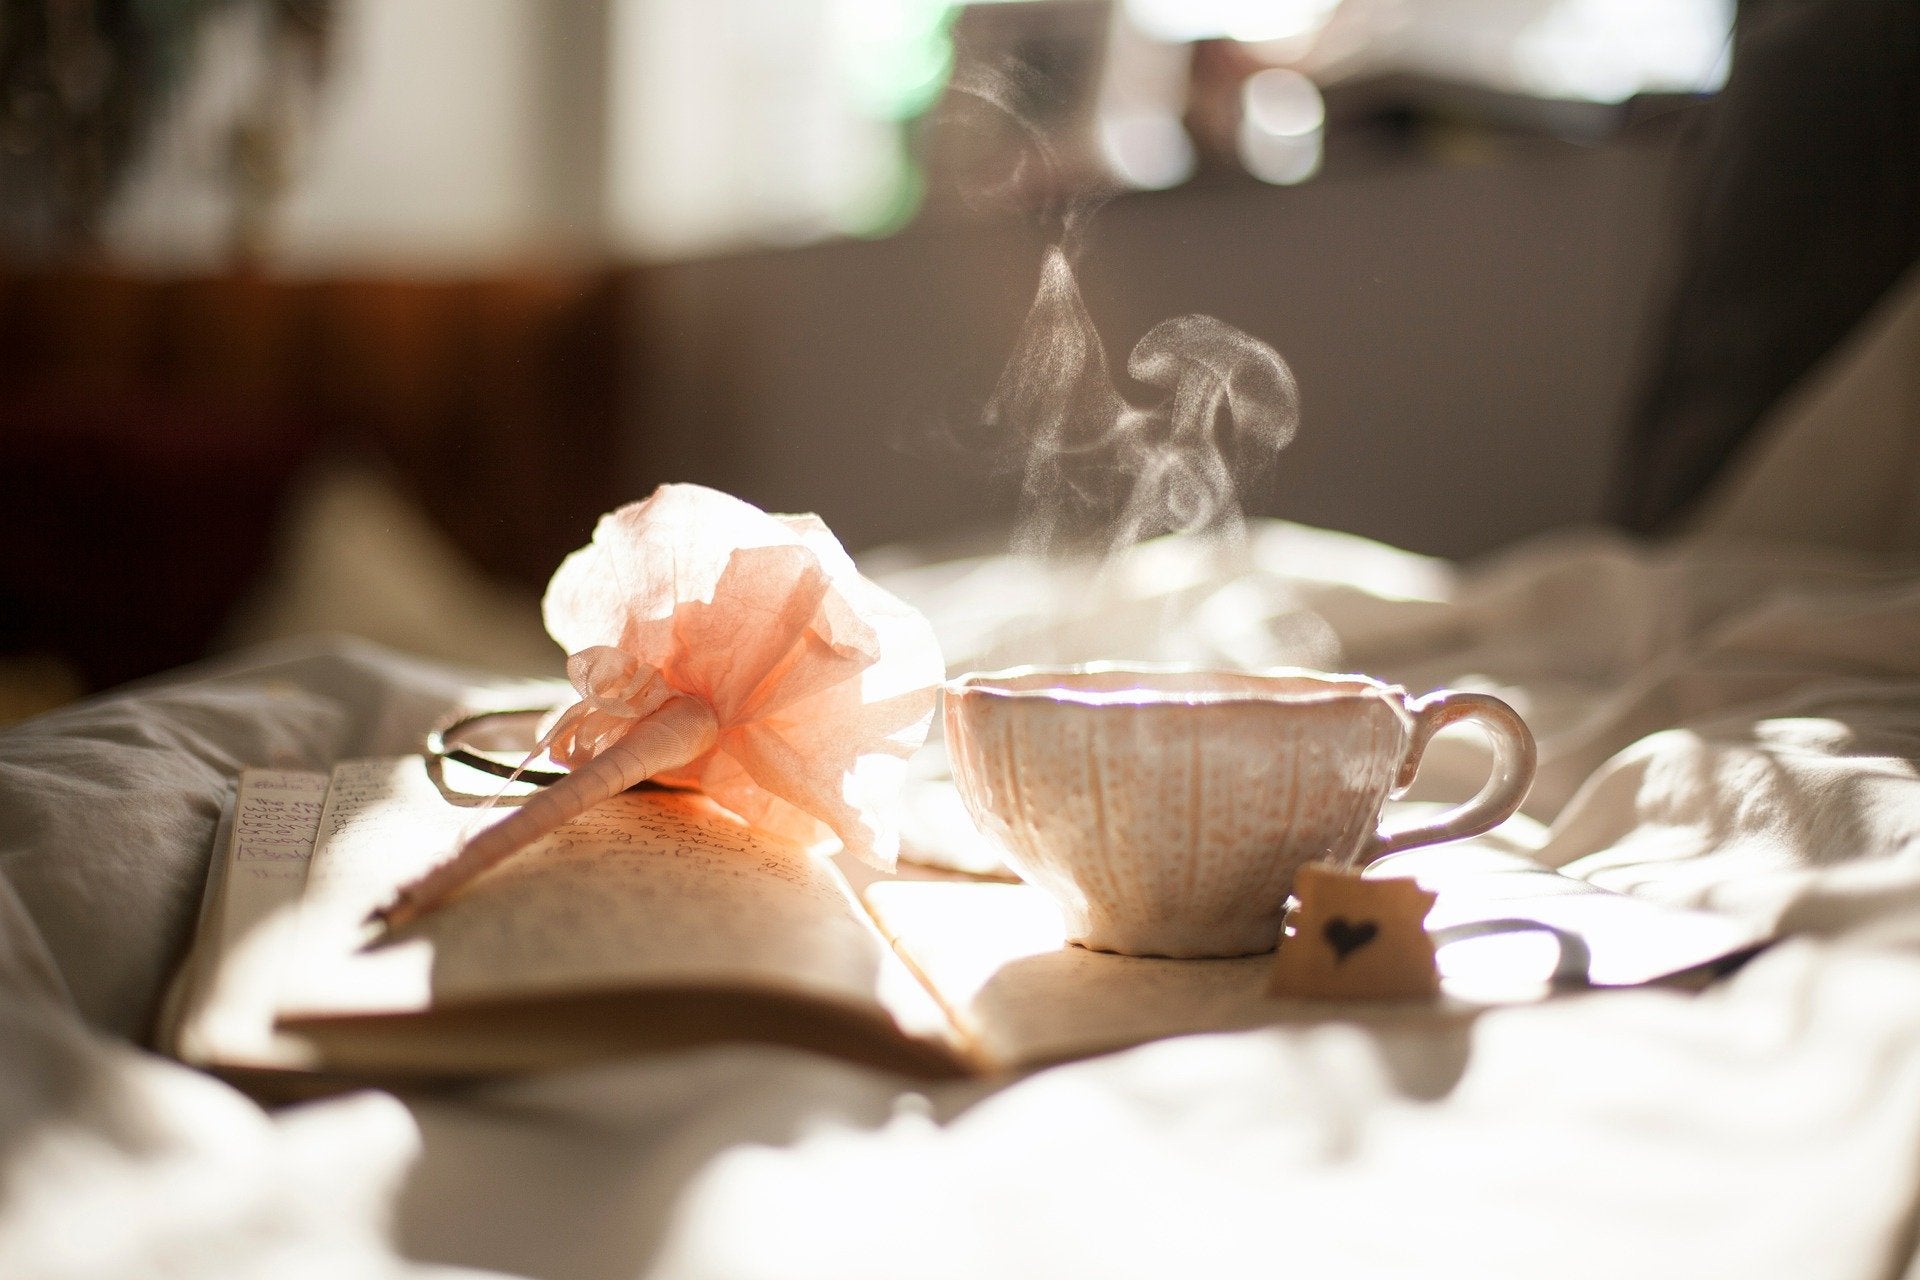 Relax, grab a cup of tea & enjoy